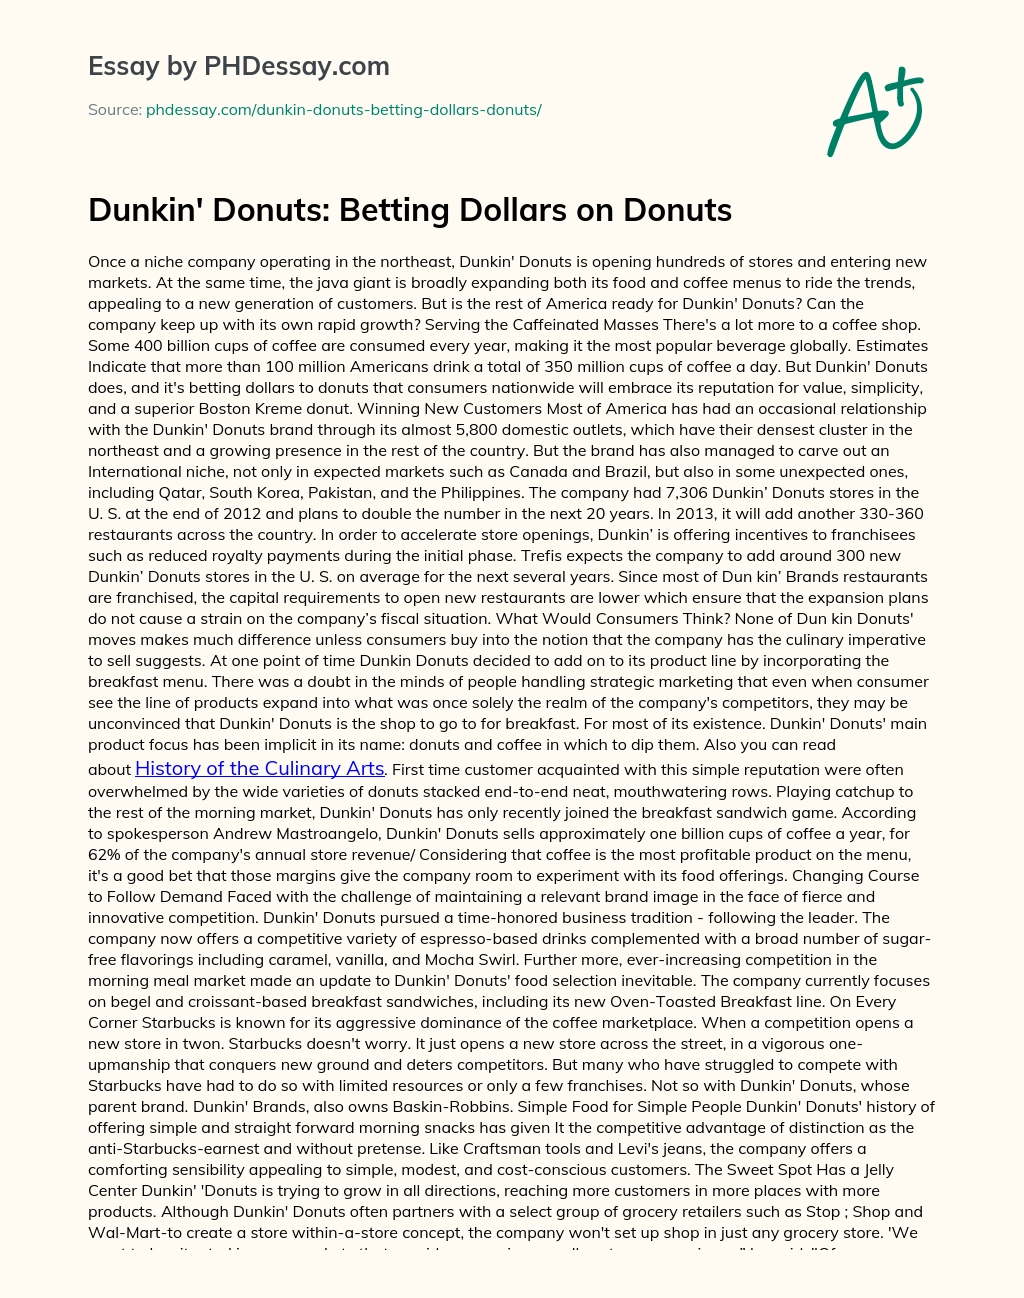 Dunkin’ Donuts: Betting Dollars on Donuts essay